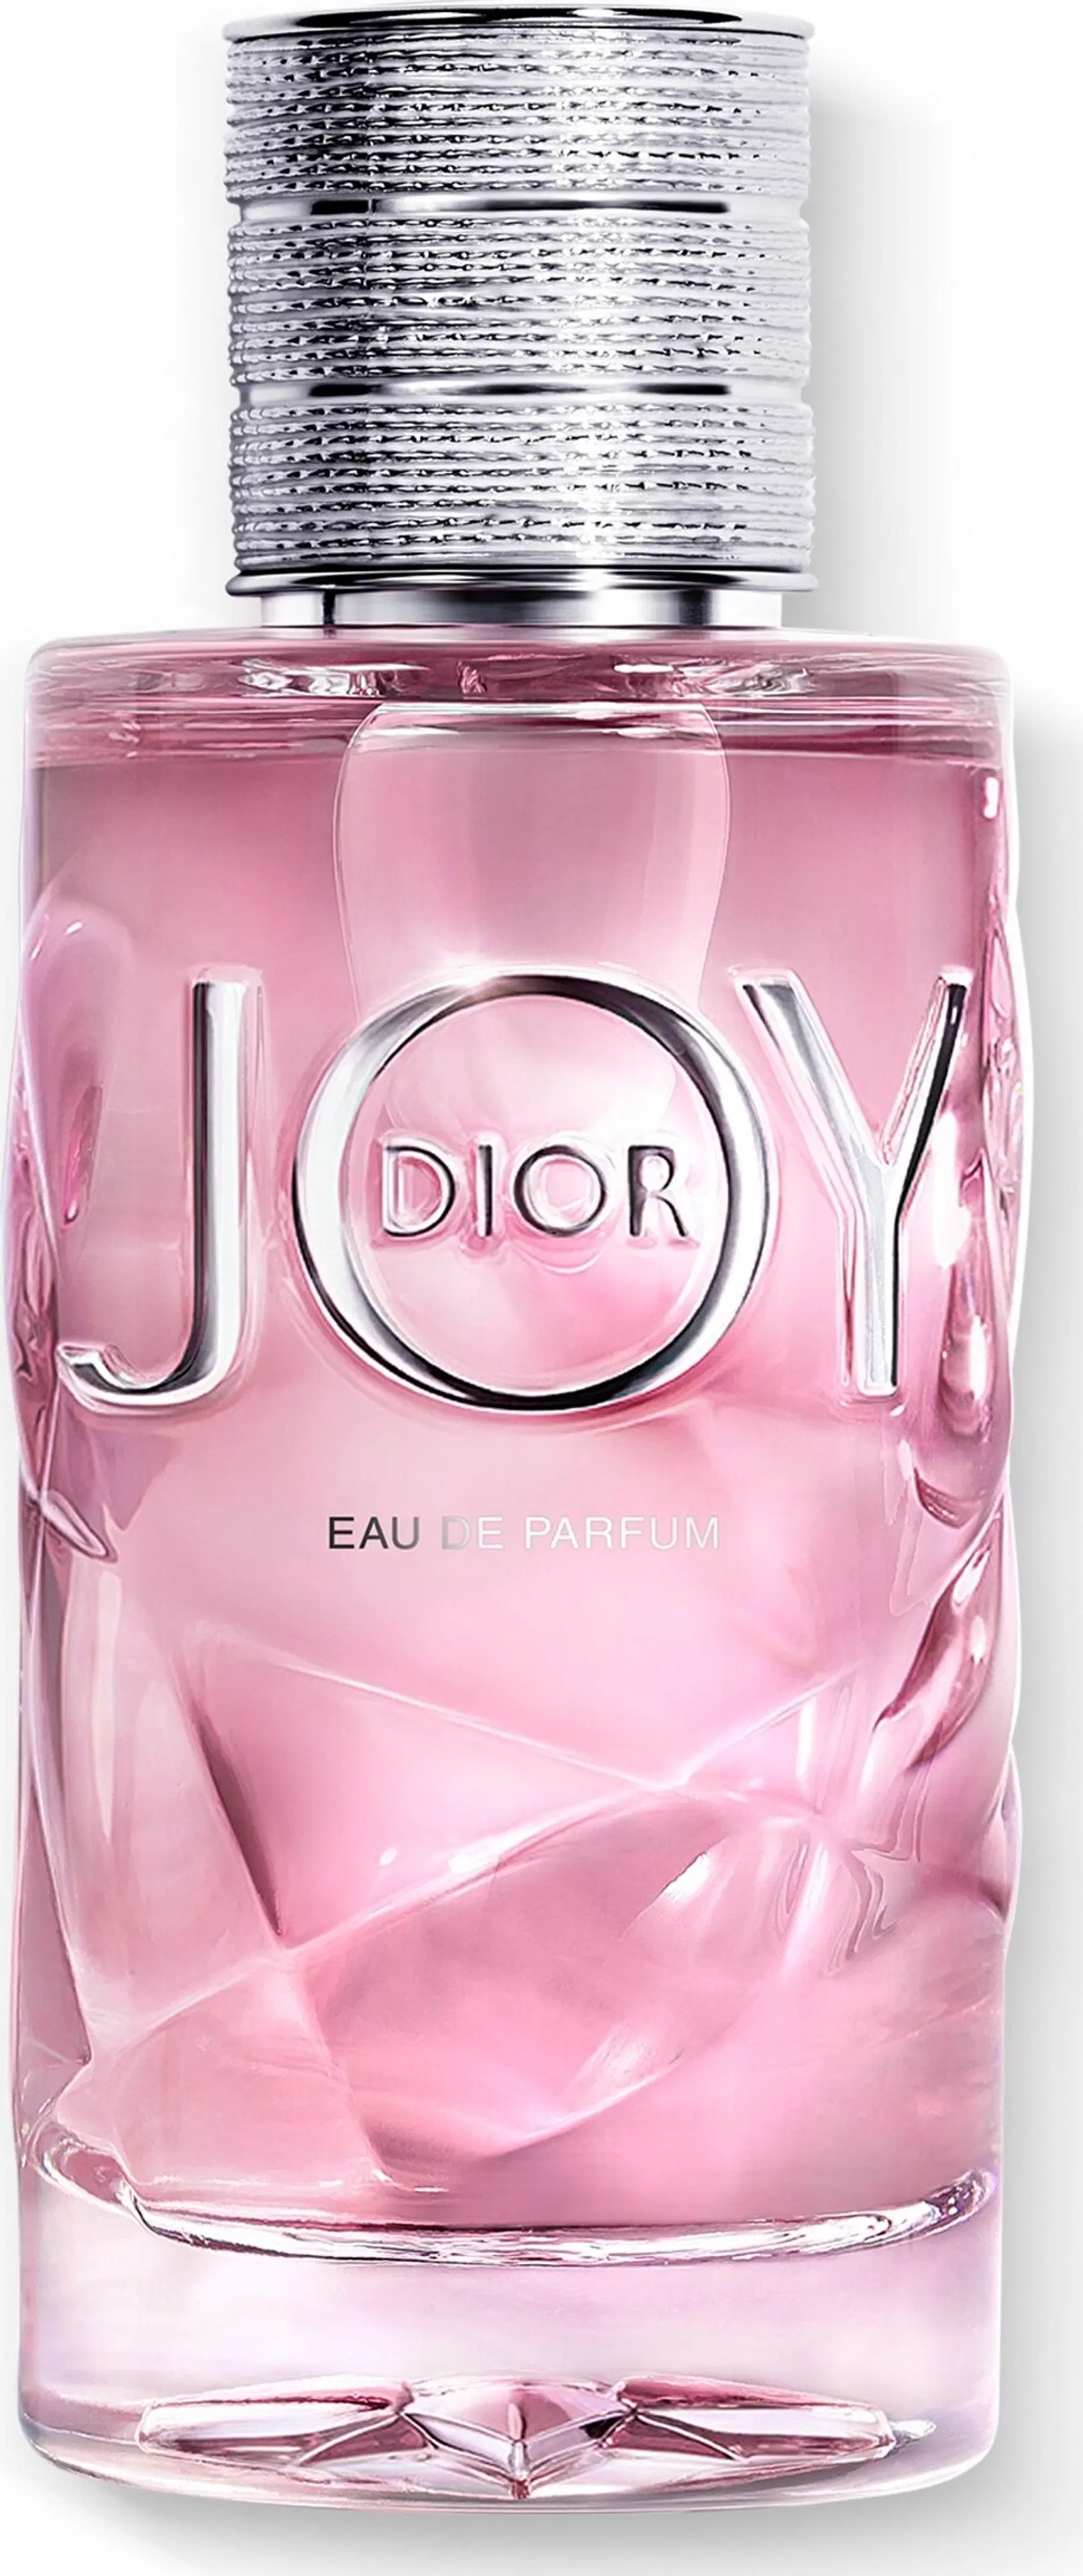 DIOR JOY by Dior EdP tuoksu 90 ml